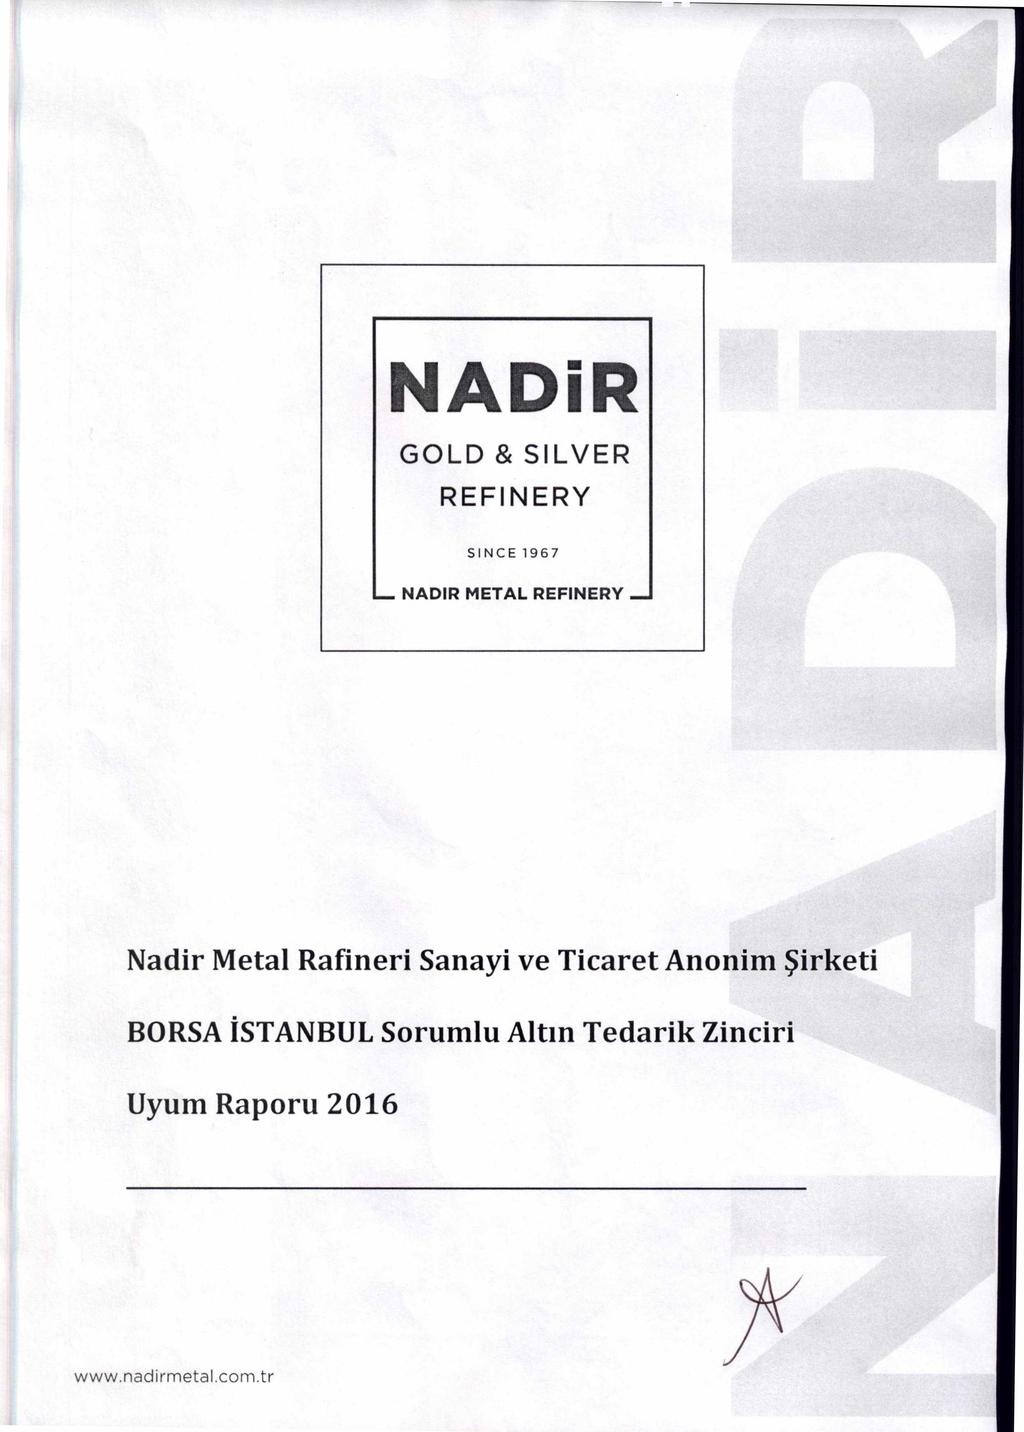 NADiR GOLD & SILVER REFINERY SINCE 1967 NADIR METAL REFINERY Nadir Metal Rafineri